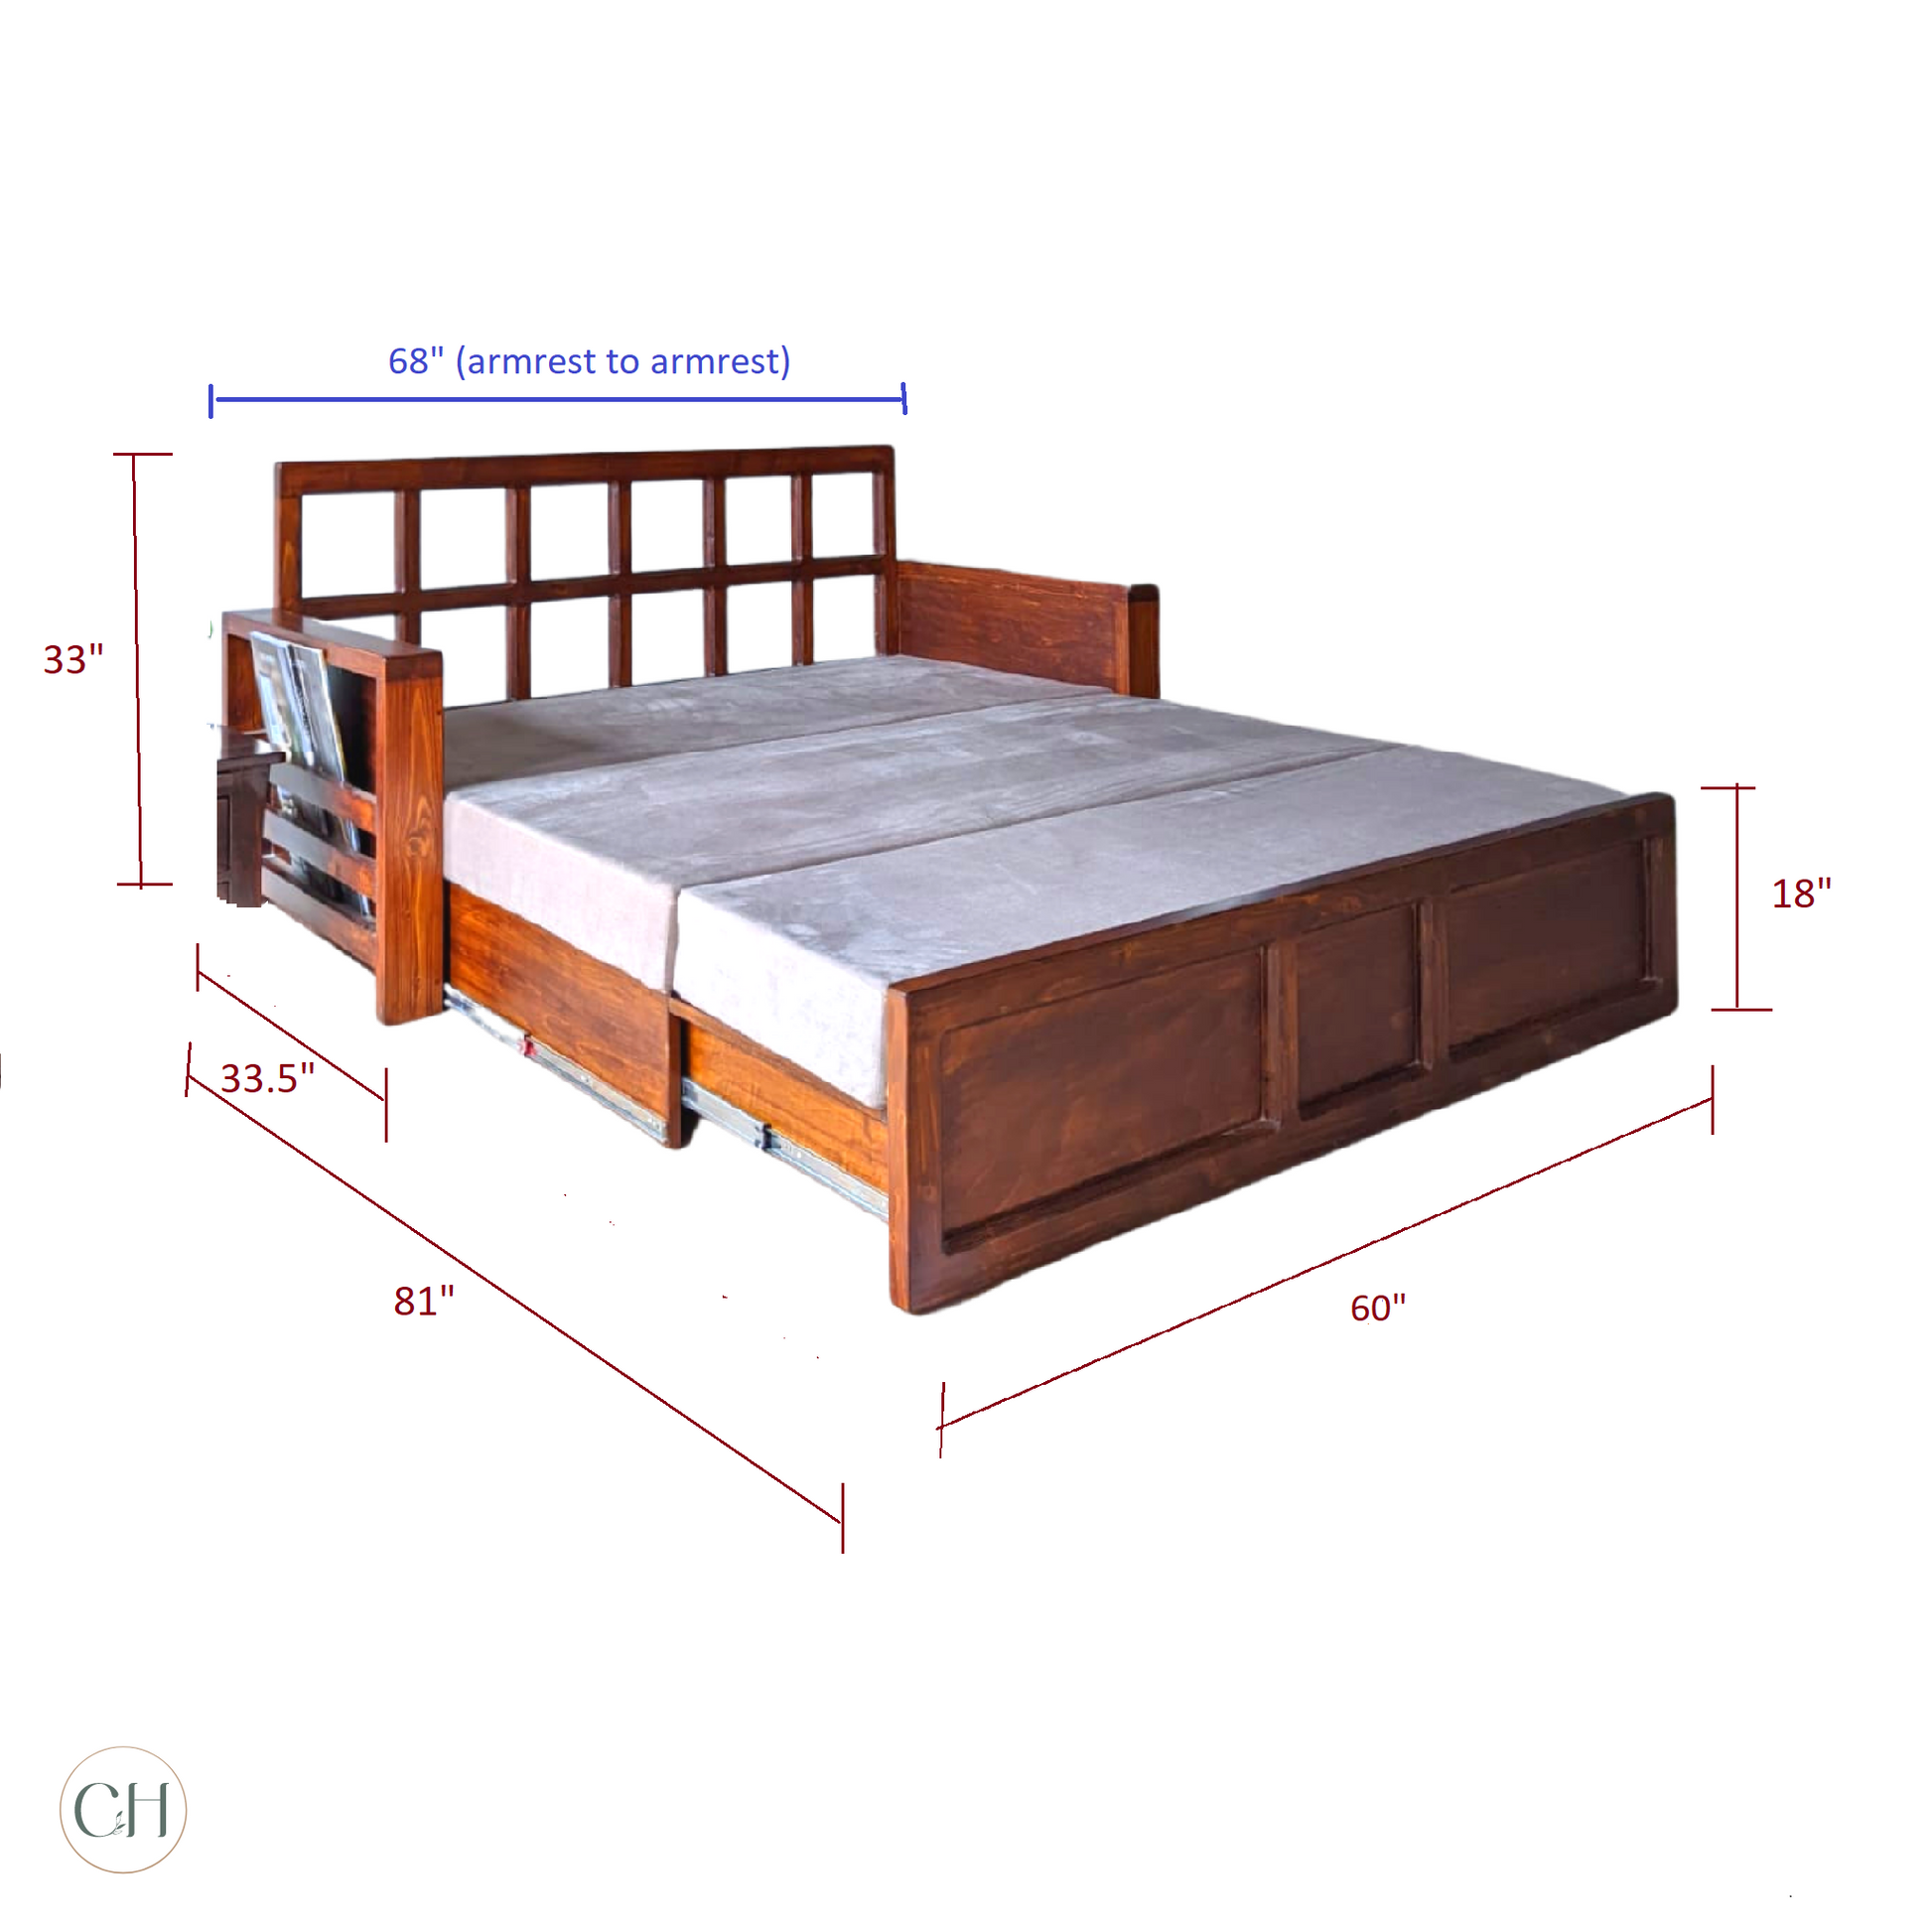 CustHum - Helen - Expandable sofa bed (dimensions)